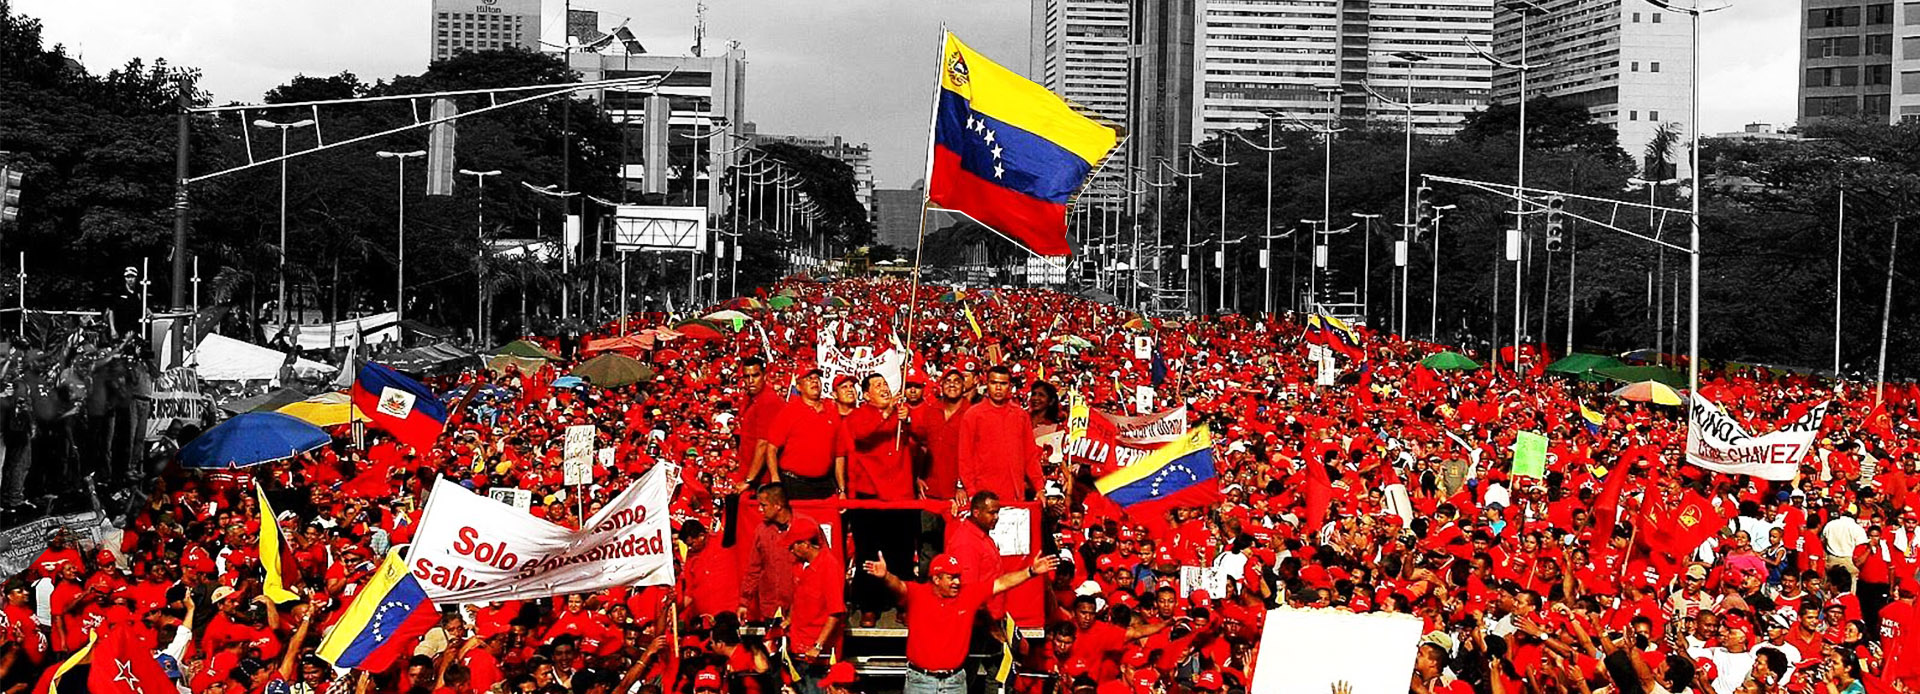 Revolución Bolivariana